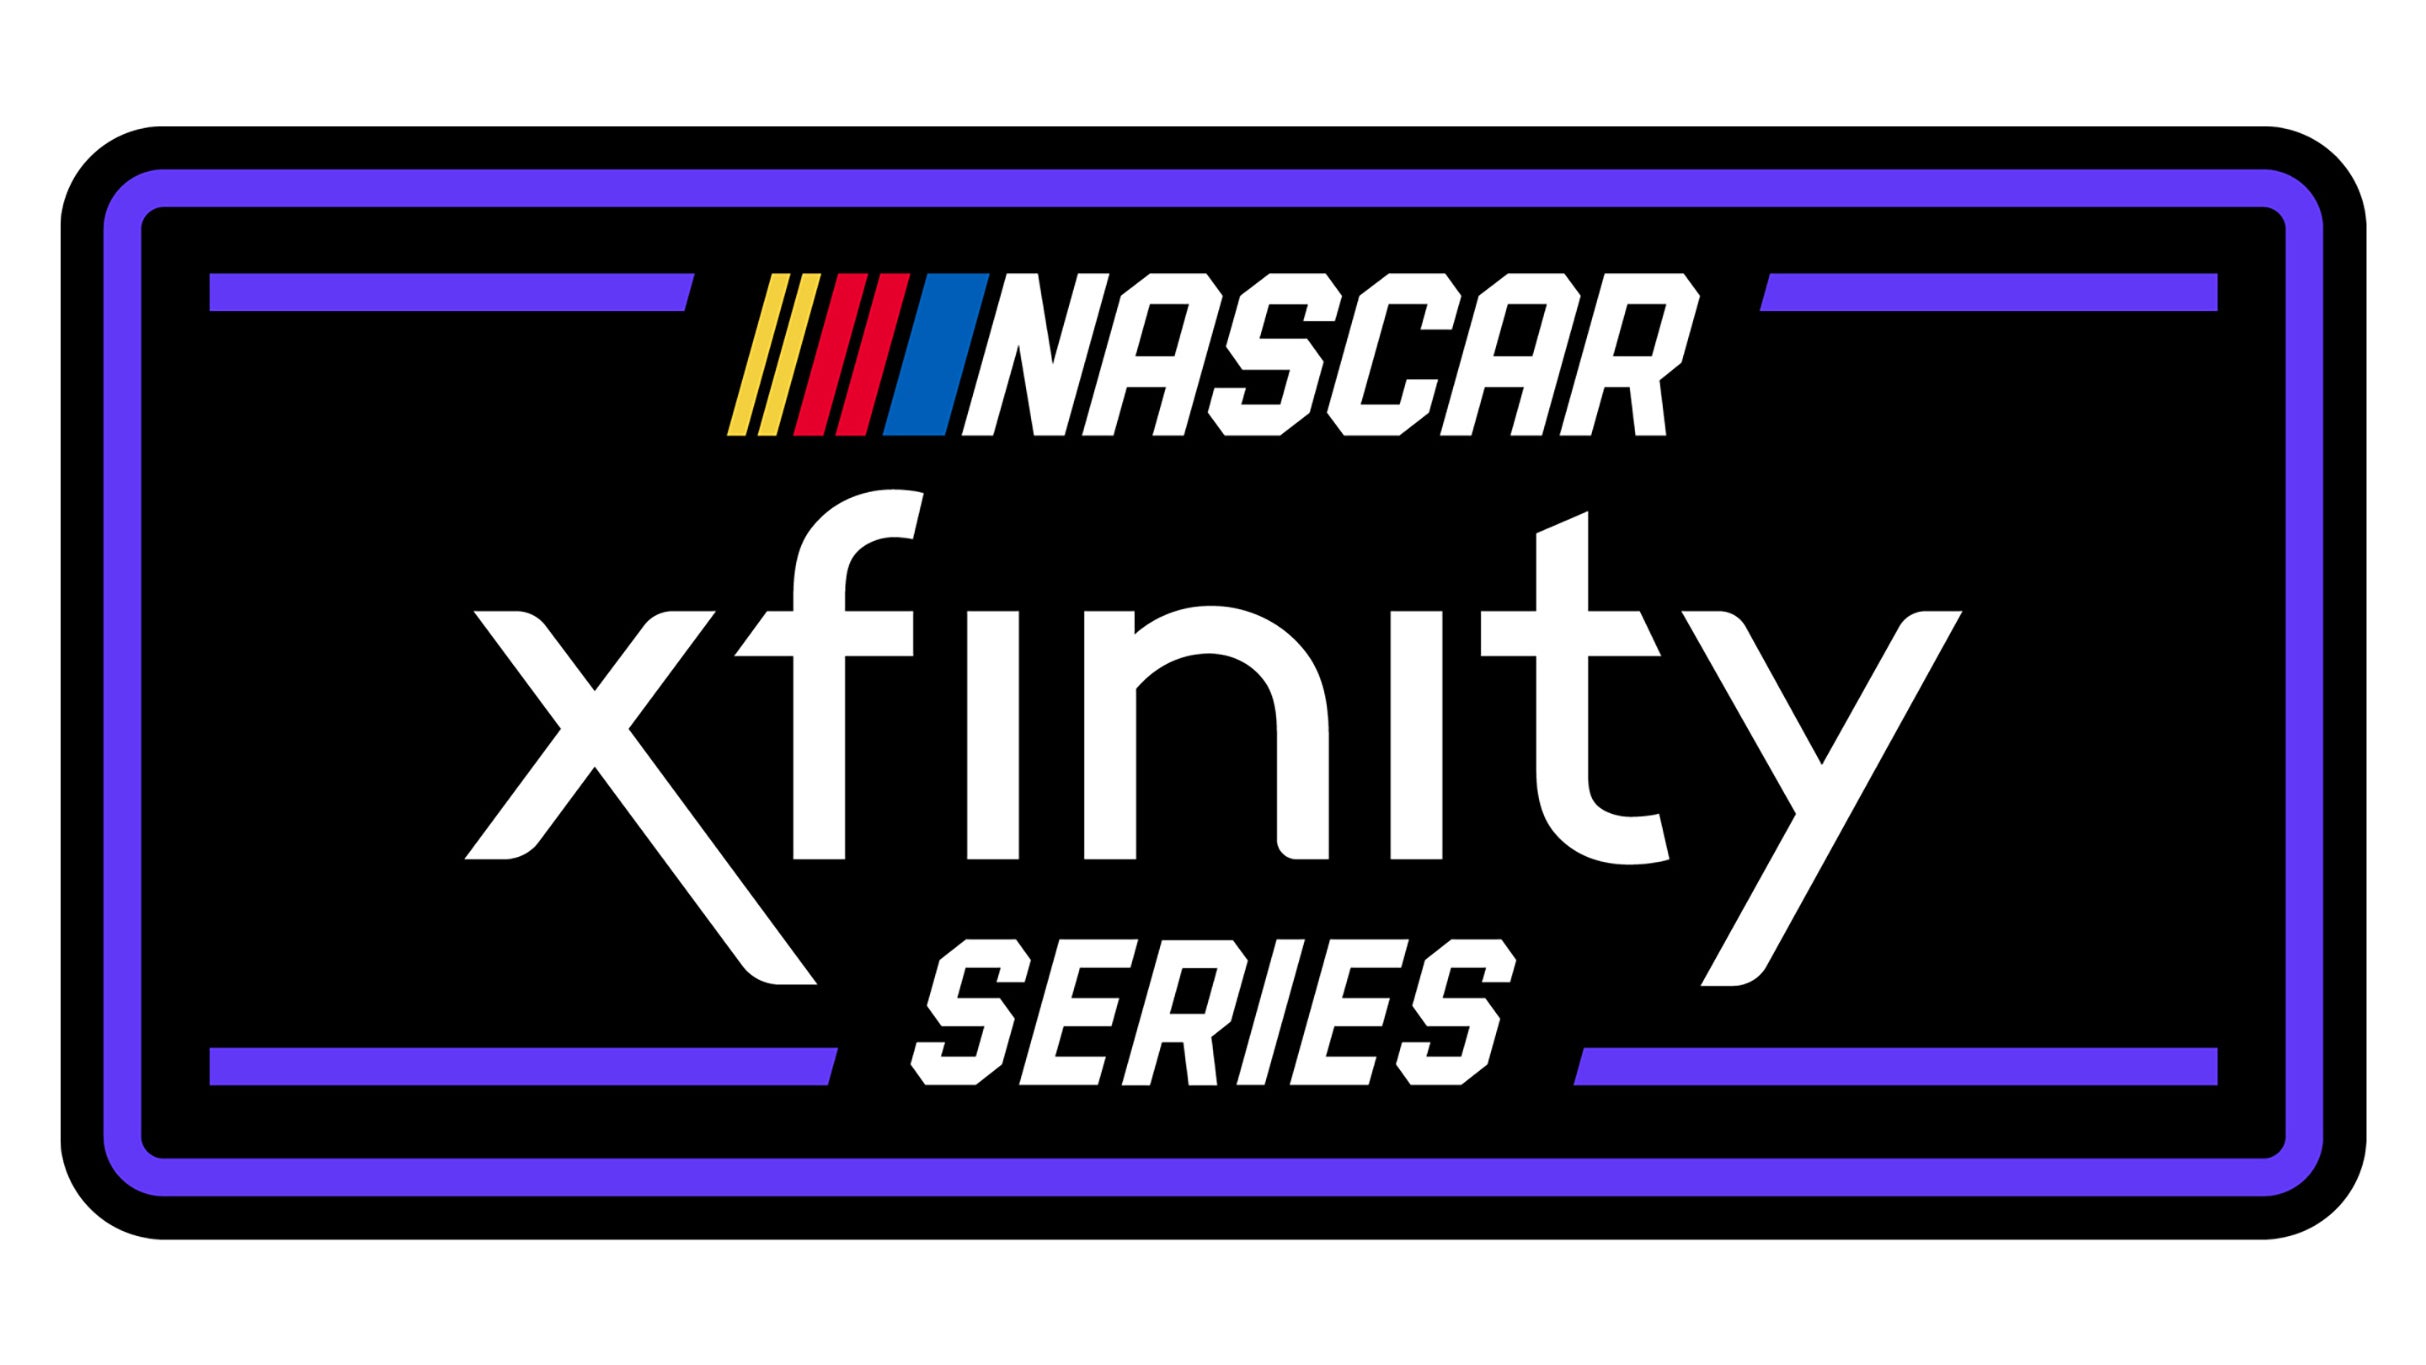 NASCAR Xfinity Series Race at Portland International Raceway